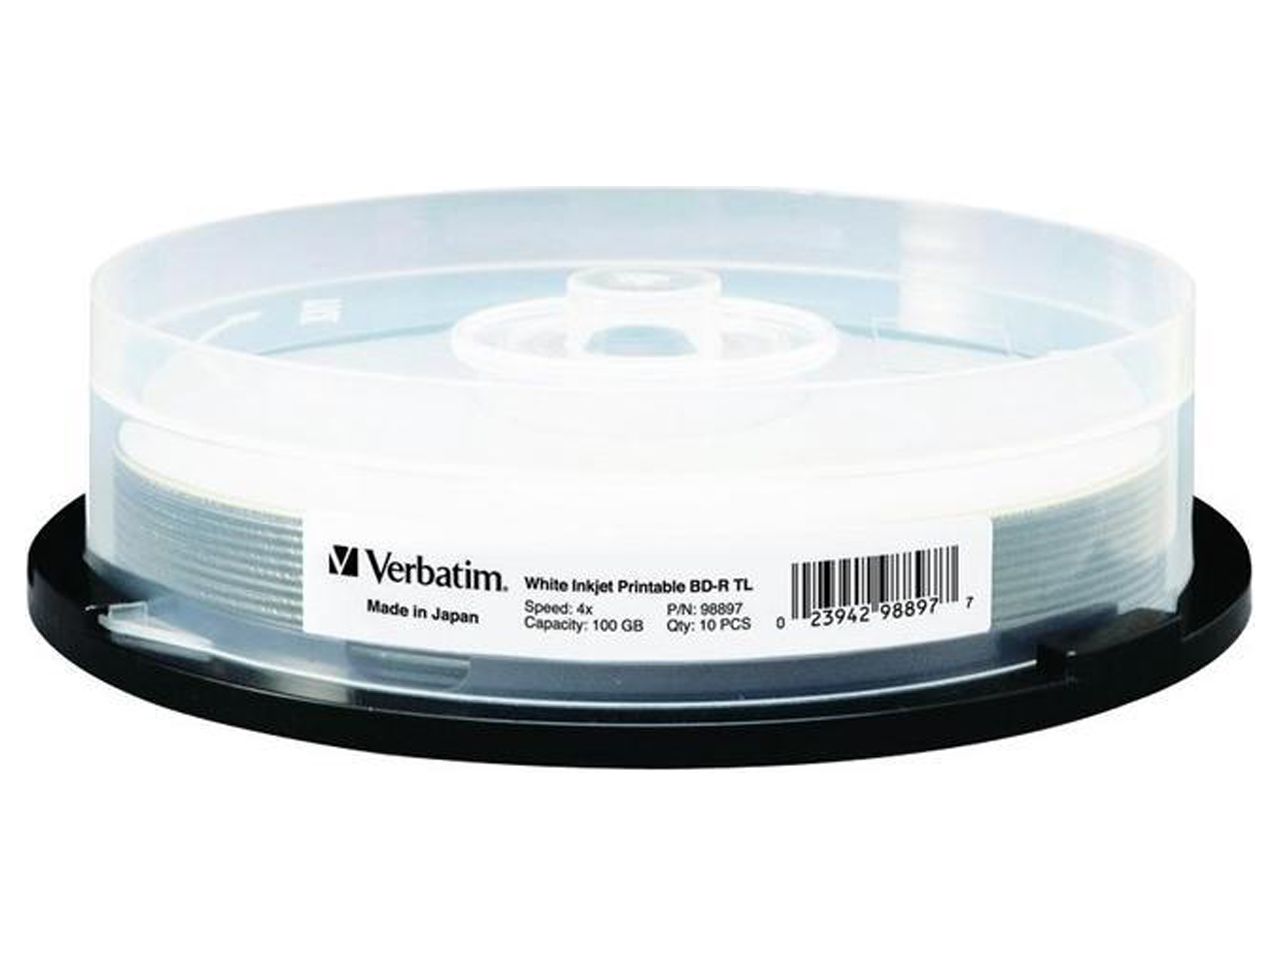 Verbatim Blu-ray Recordable Media - BD-R - 4x - 100 GB - 10 Pack Spindle - image 5 of 12